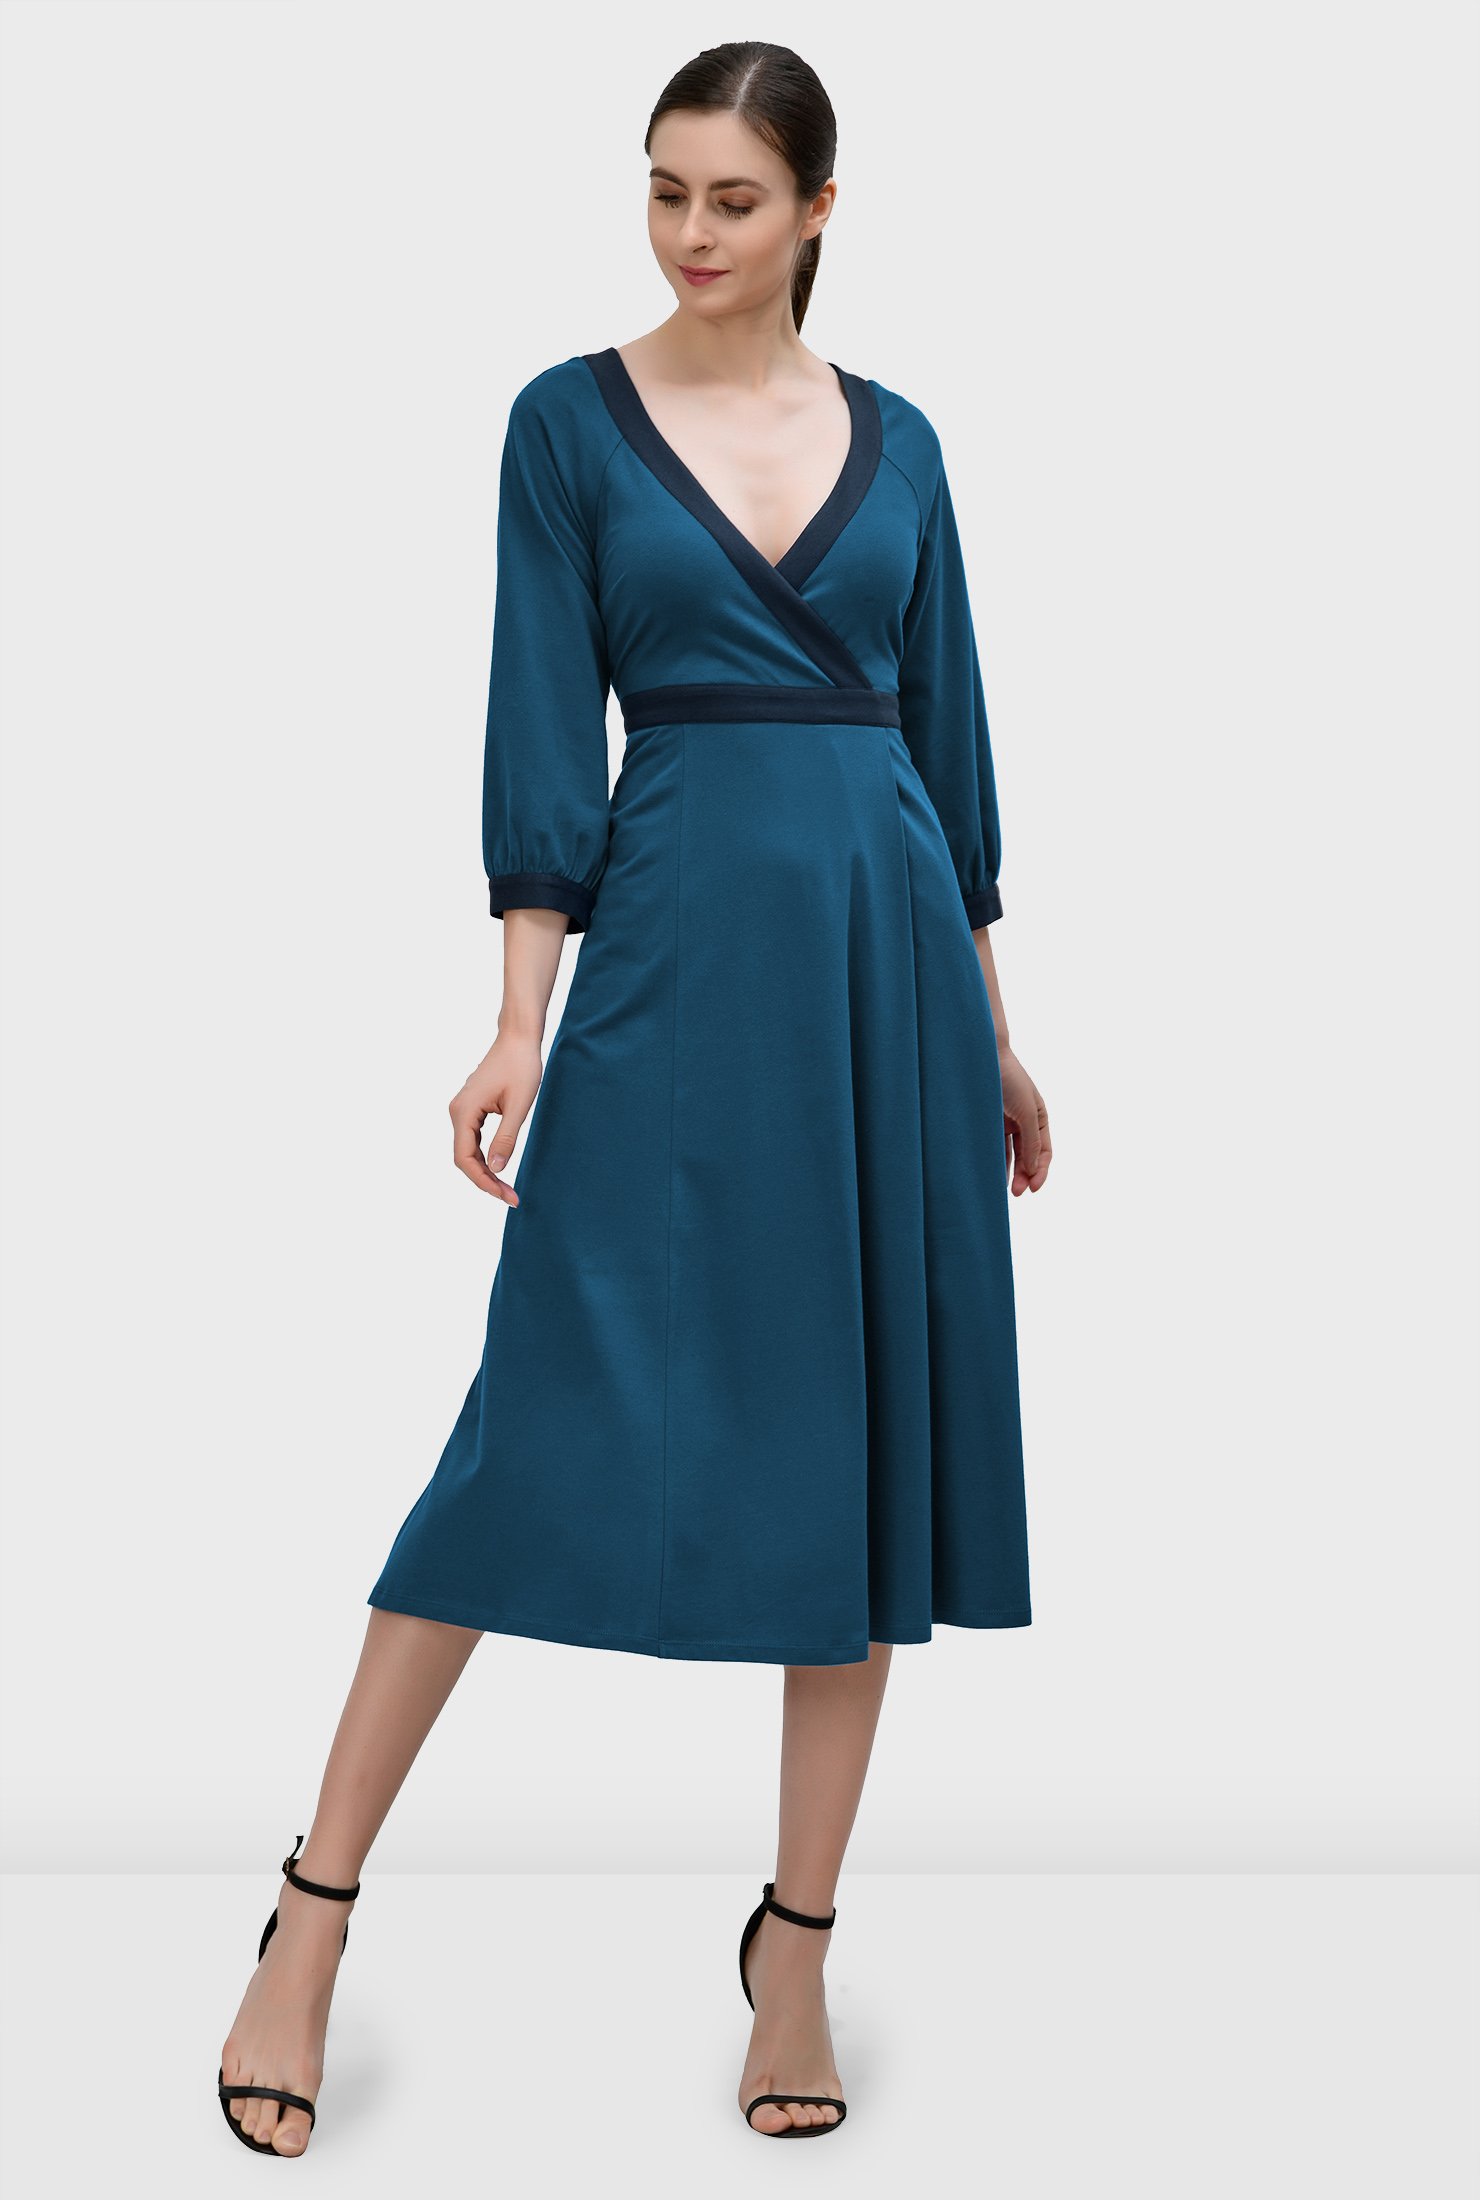 Shop Contrast trim cotton jersey knit faux wrap dress | eShakti